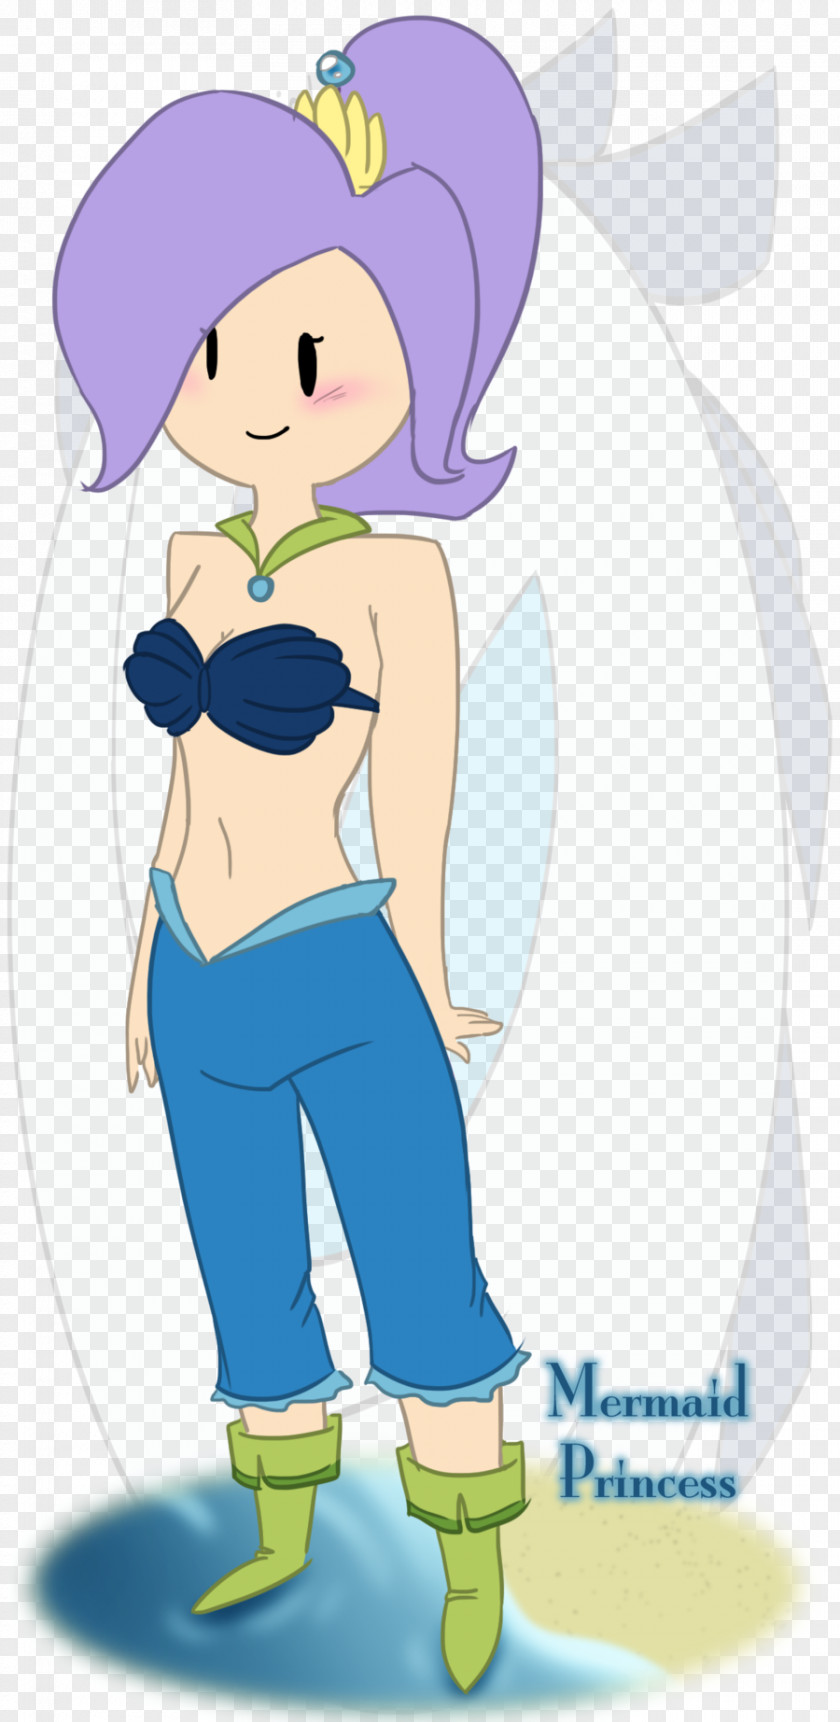 Mermaid DeviantArt Character PNG